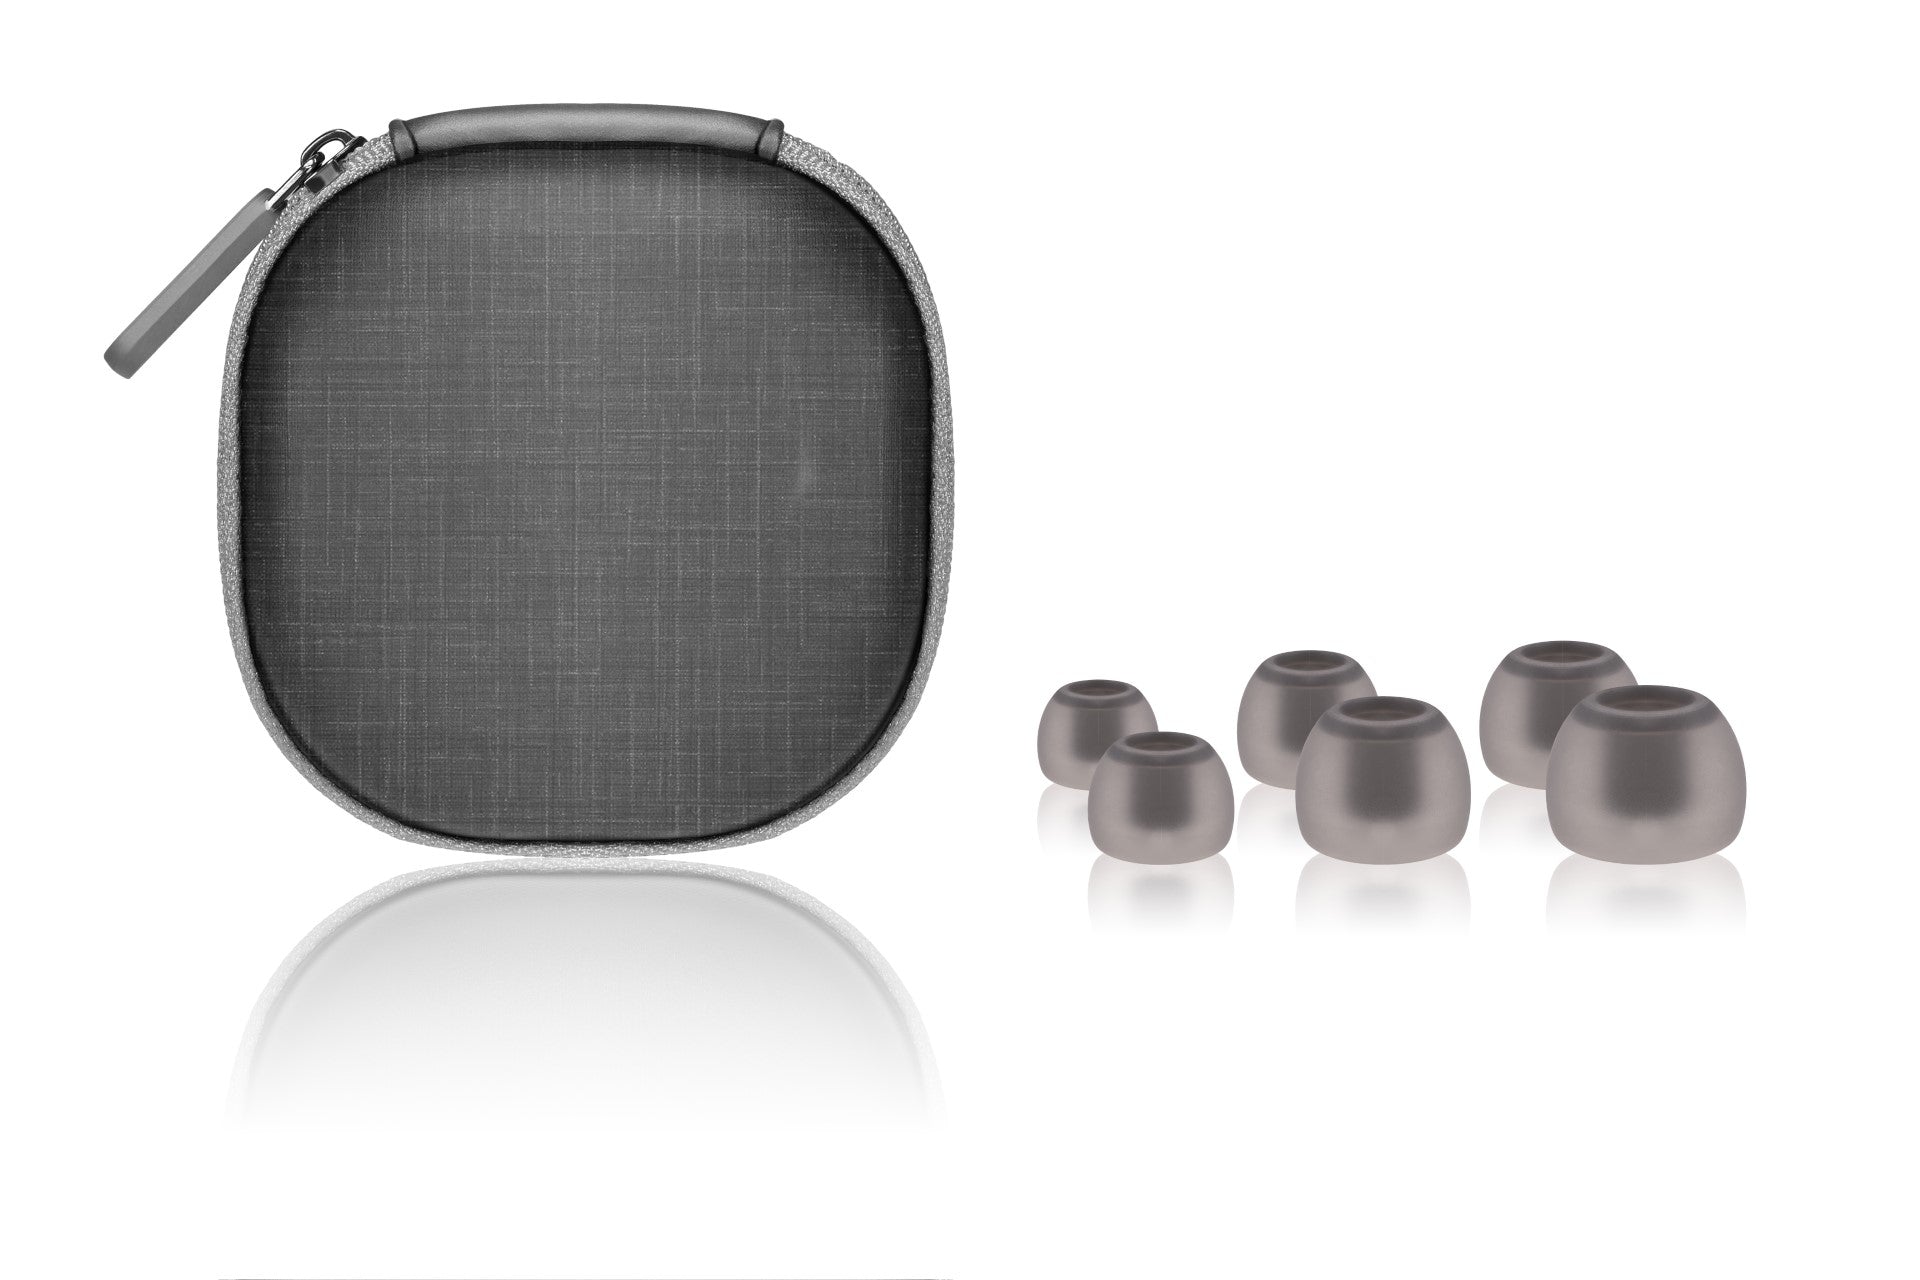 SoundMAGIC E11C In Ear Isolating Earphones with Mic - Silver - Refurbished